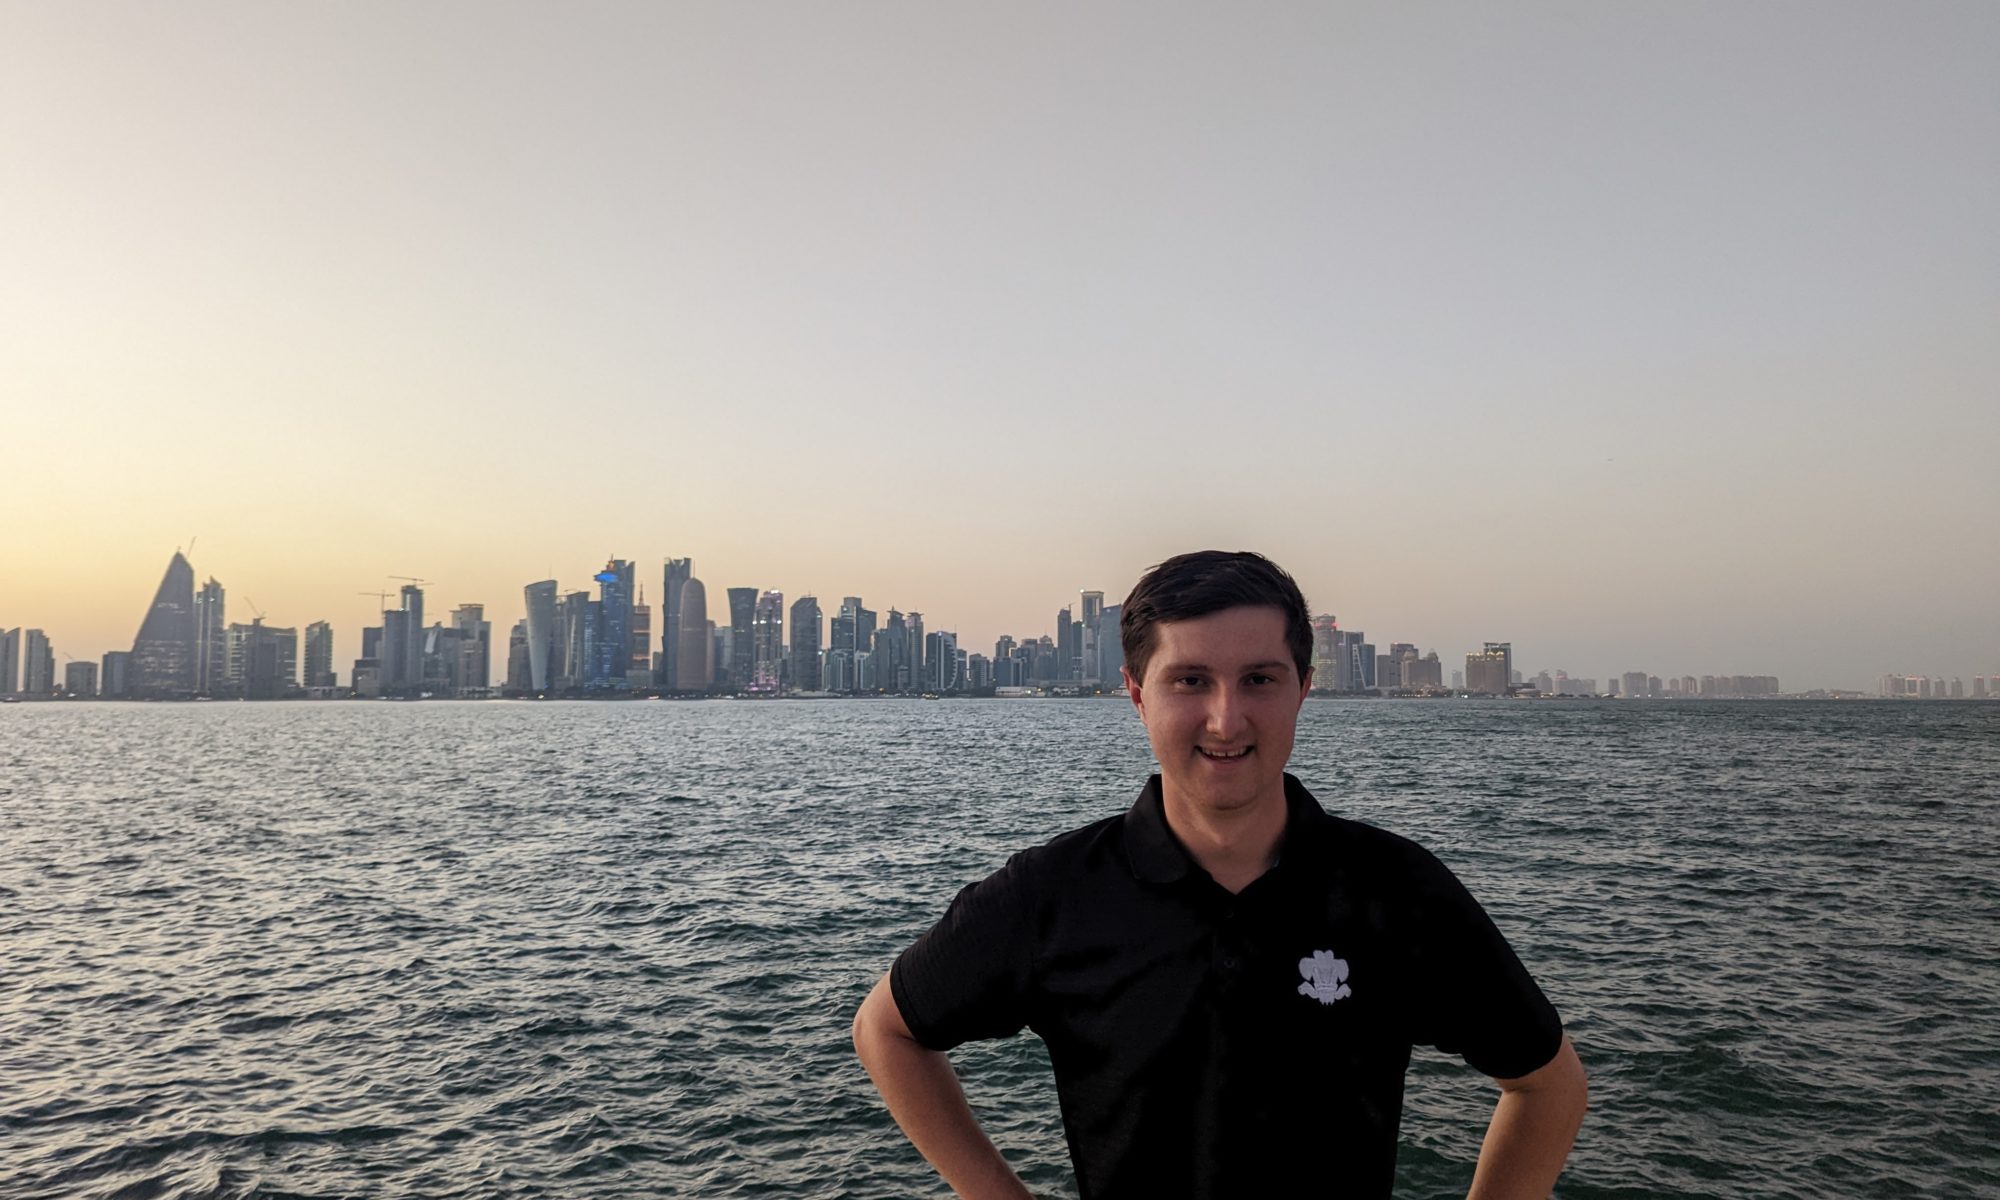 Conlan pictured in Qatar